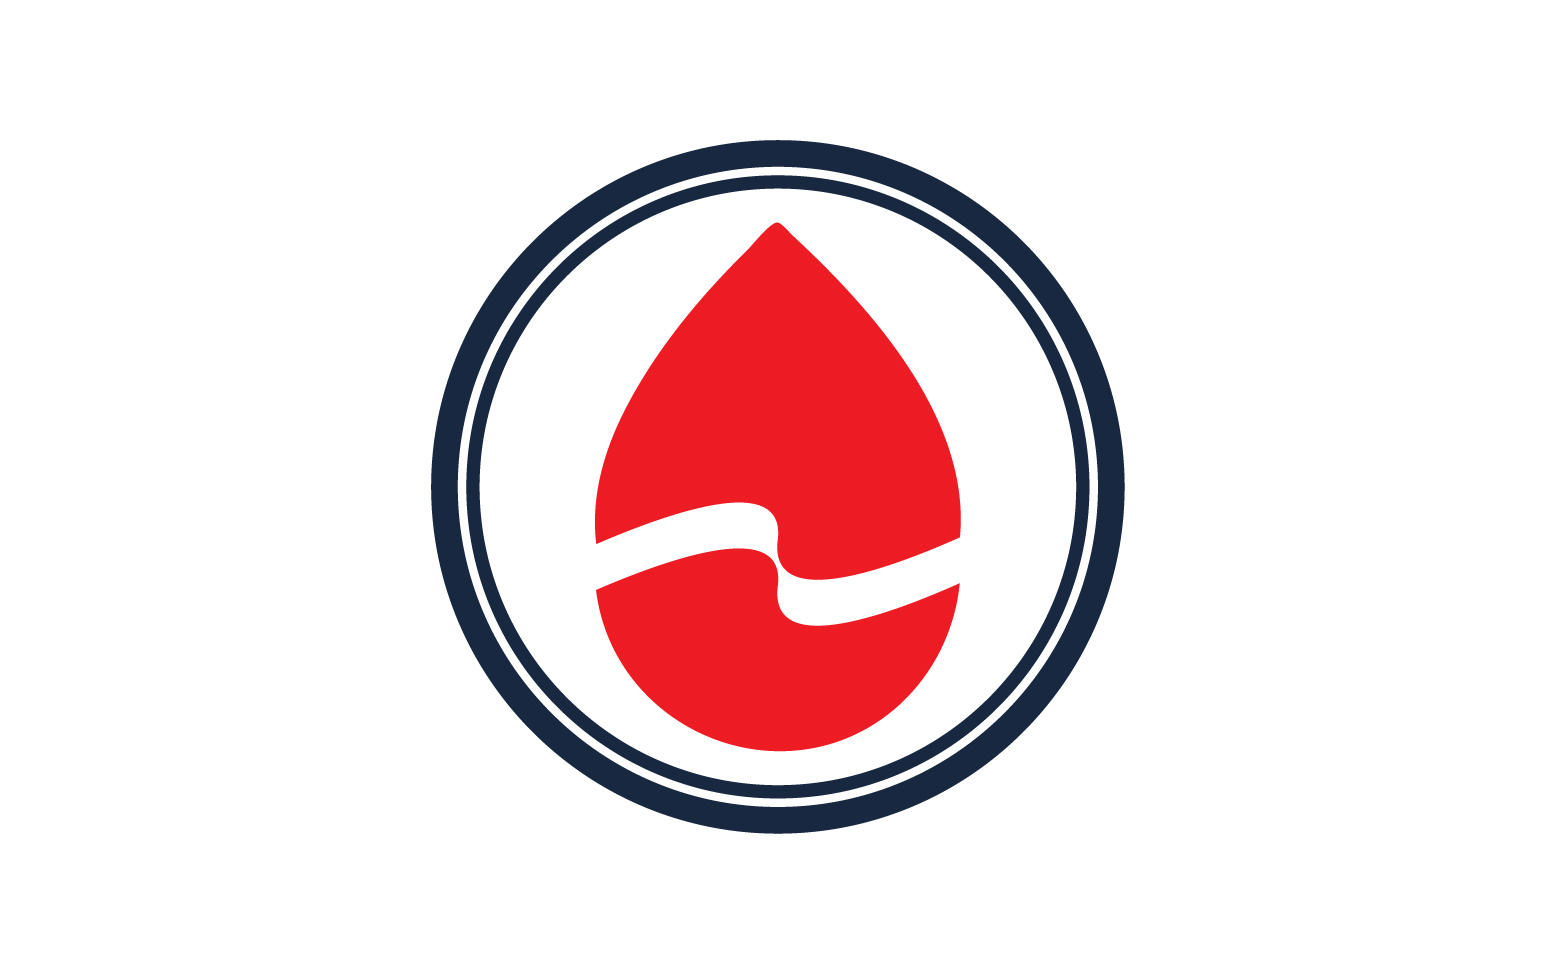 Blood drop icon logo template version v36